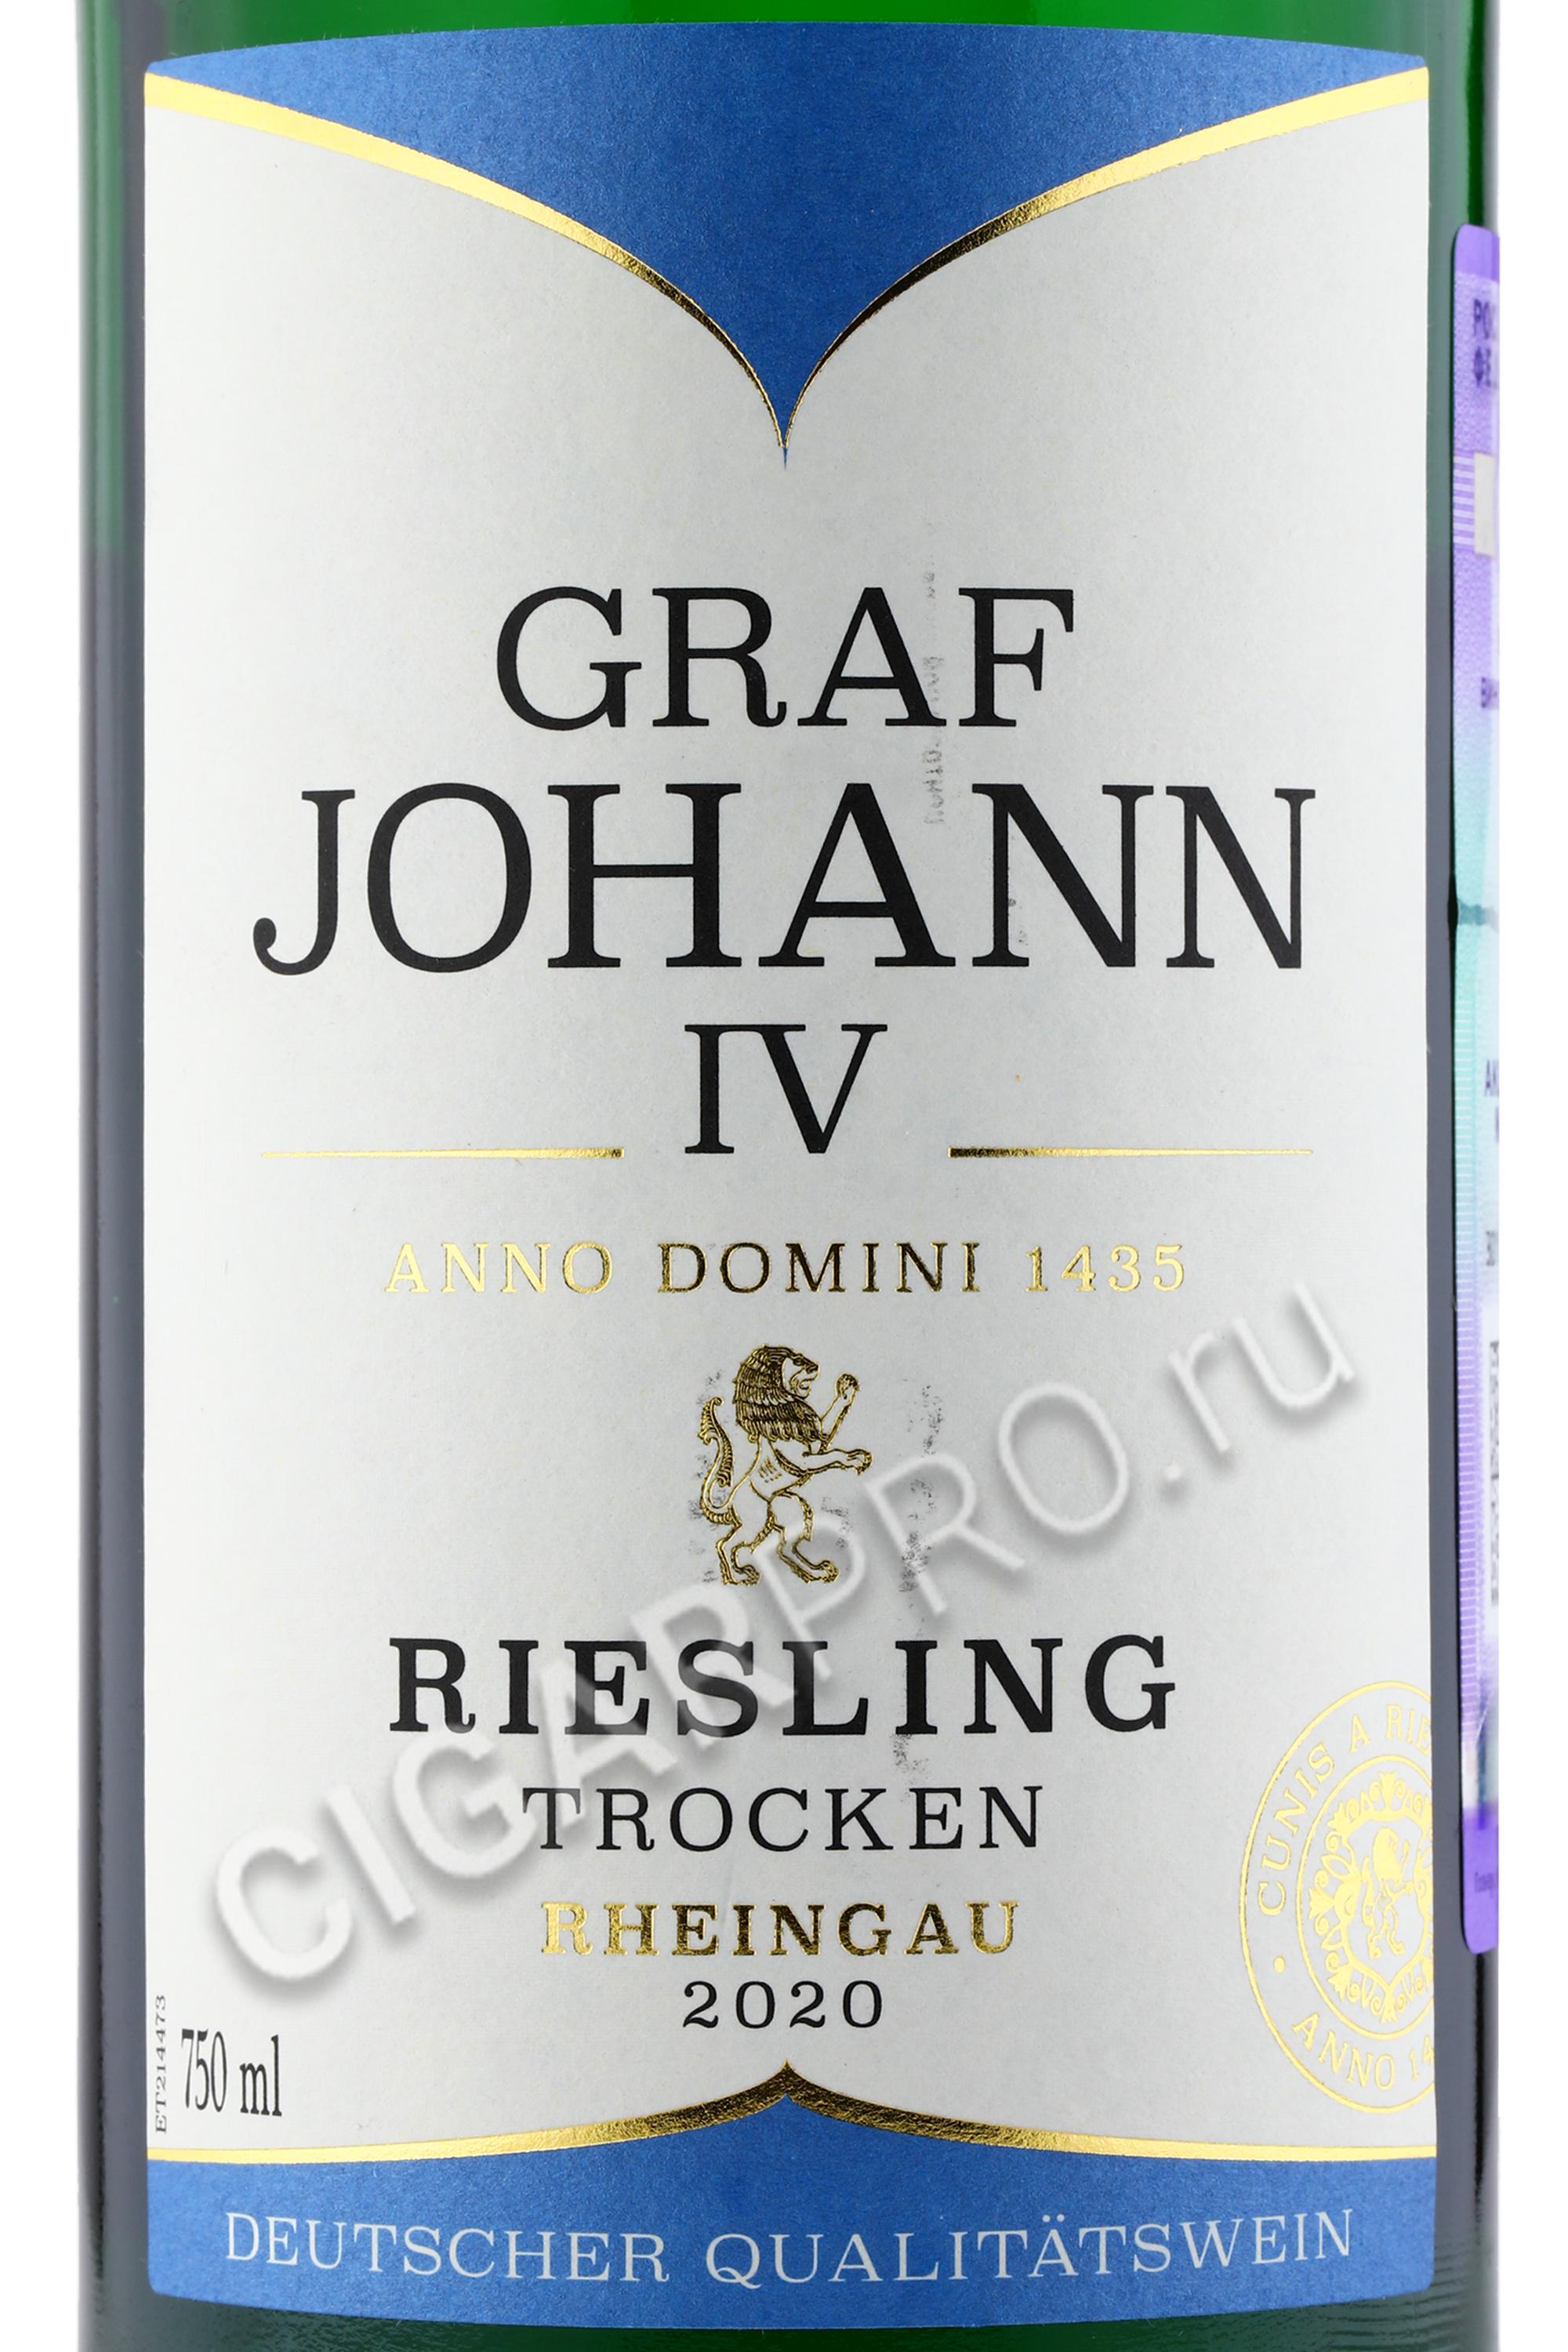 Graf Johann IV Riesling Trocken  вино Граф Йохан IV Рислинг .